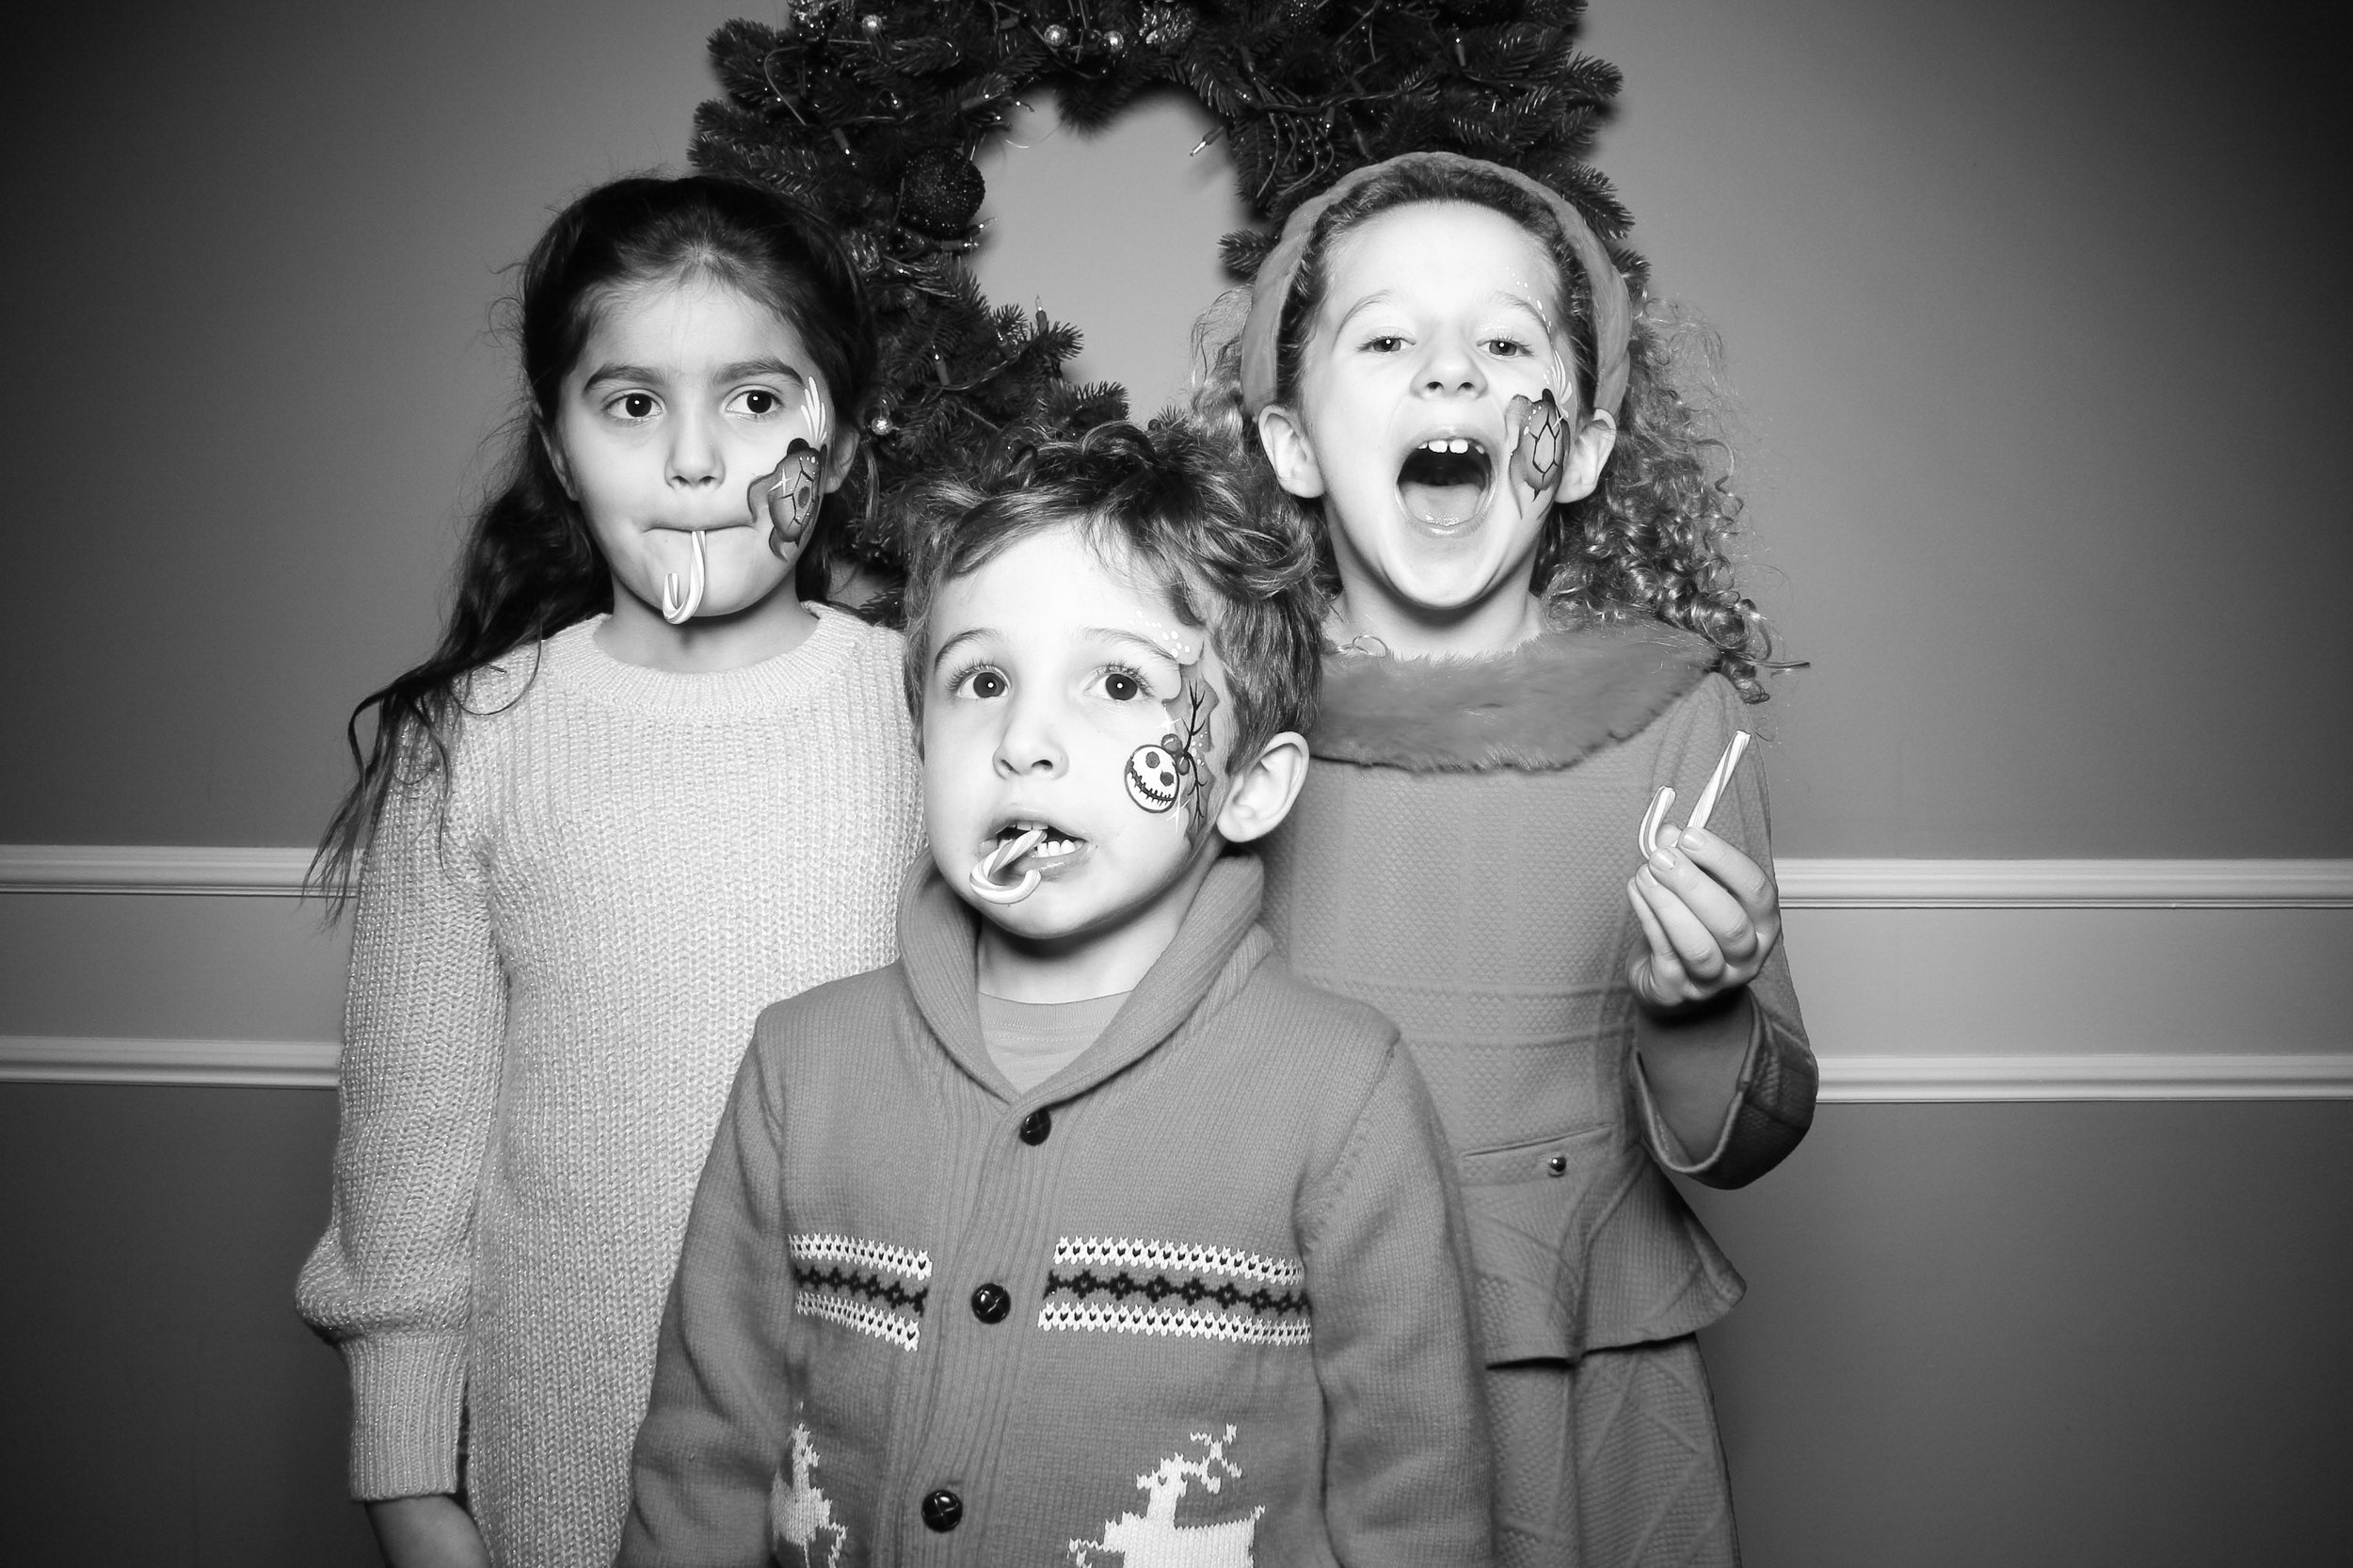 fotio-photobooth-ridgemoor-holiday-party-santa-portrait-chicago-4.jpg